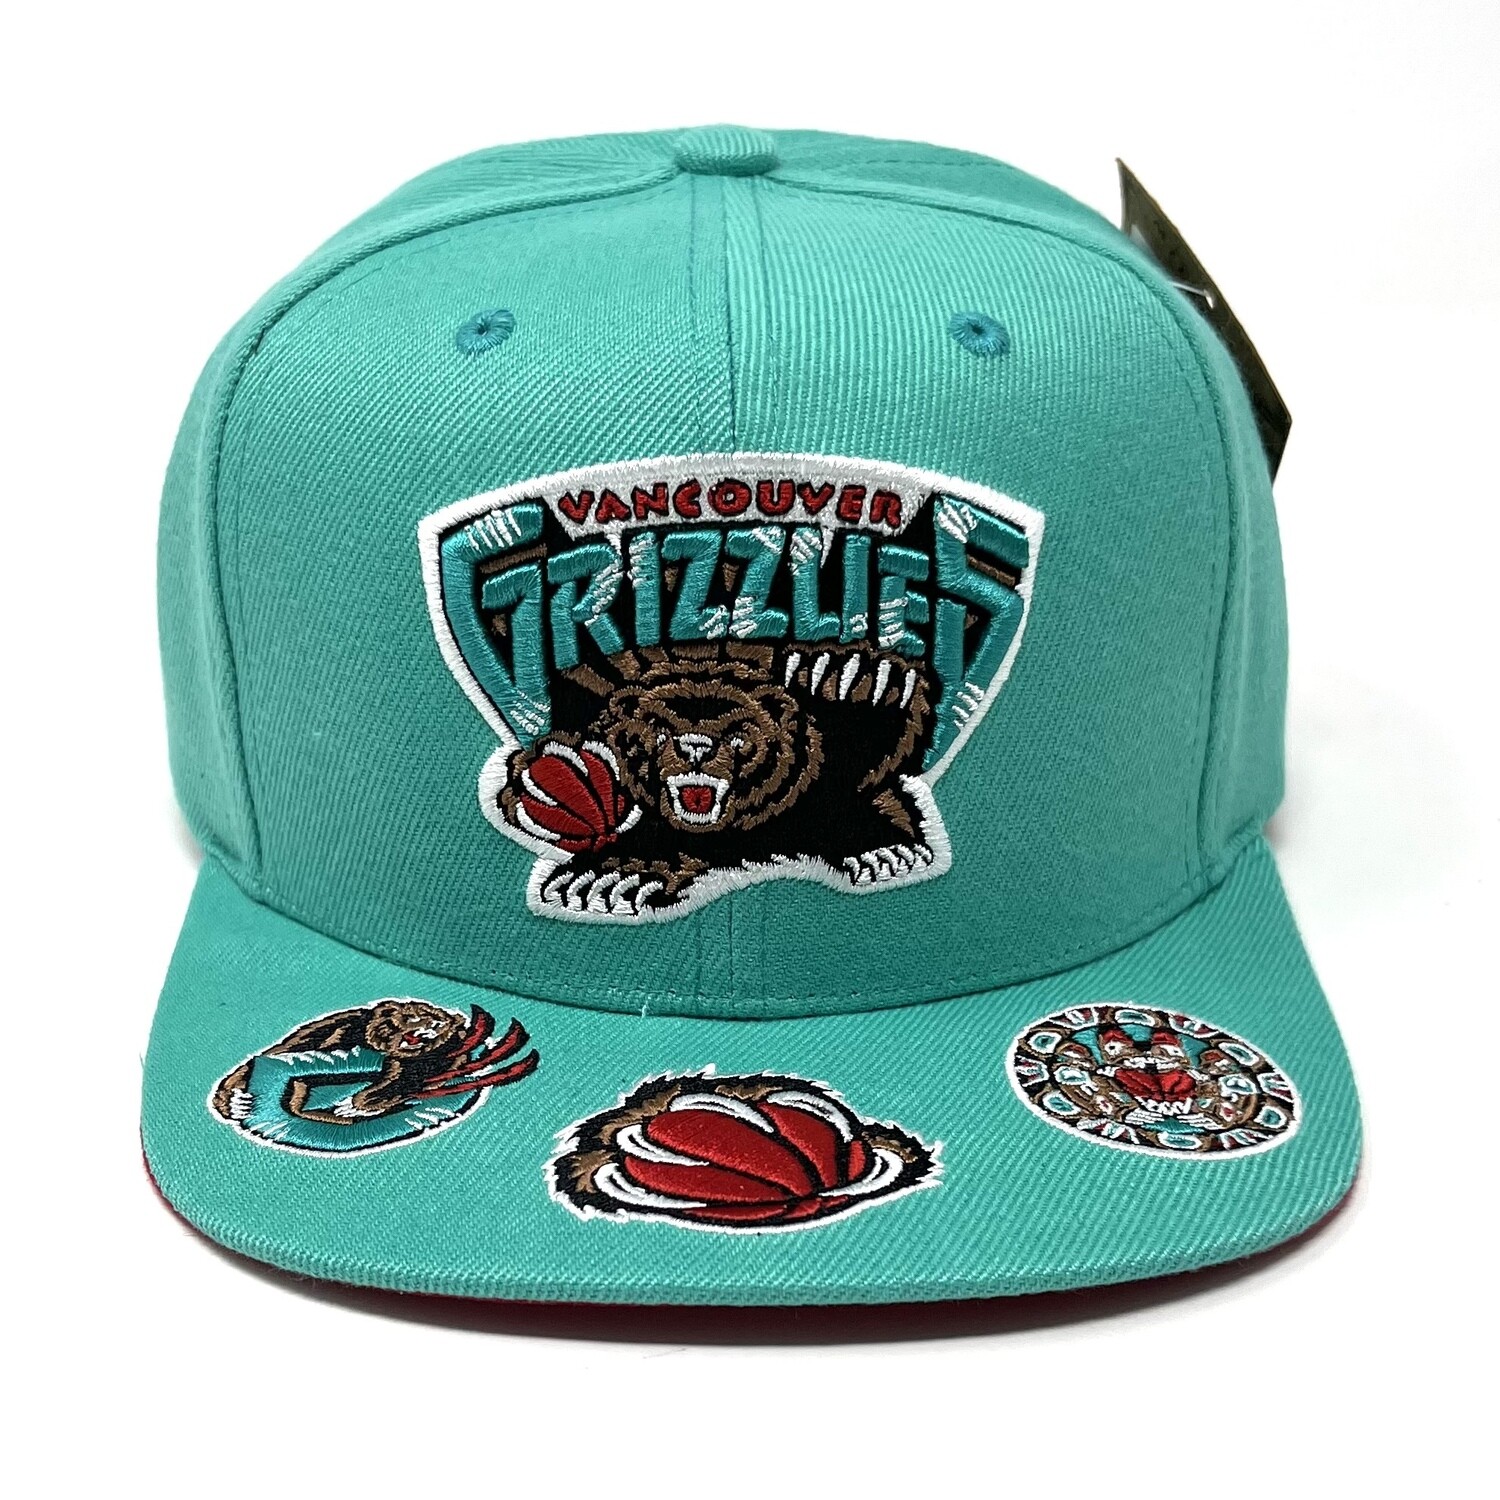 Men's Vancouver Grizzlies Hats